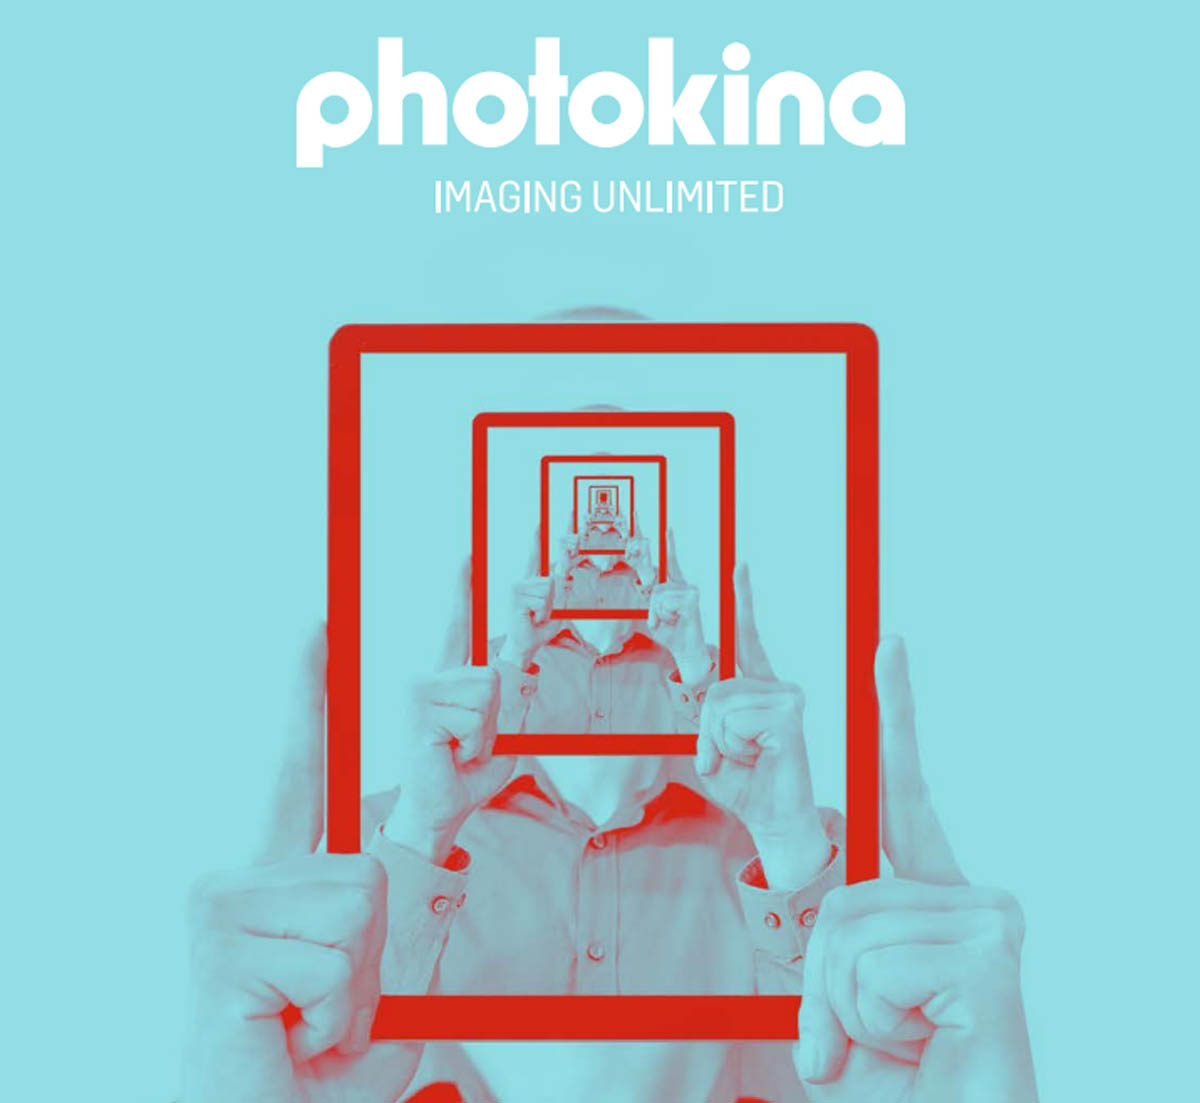 photokina 2016